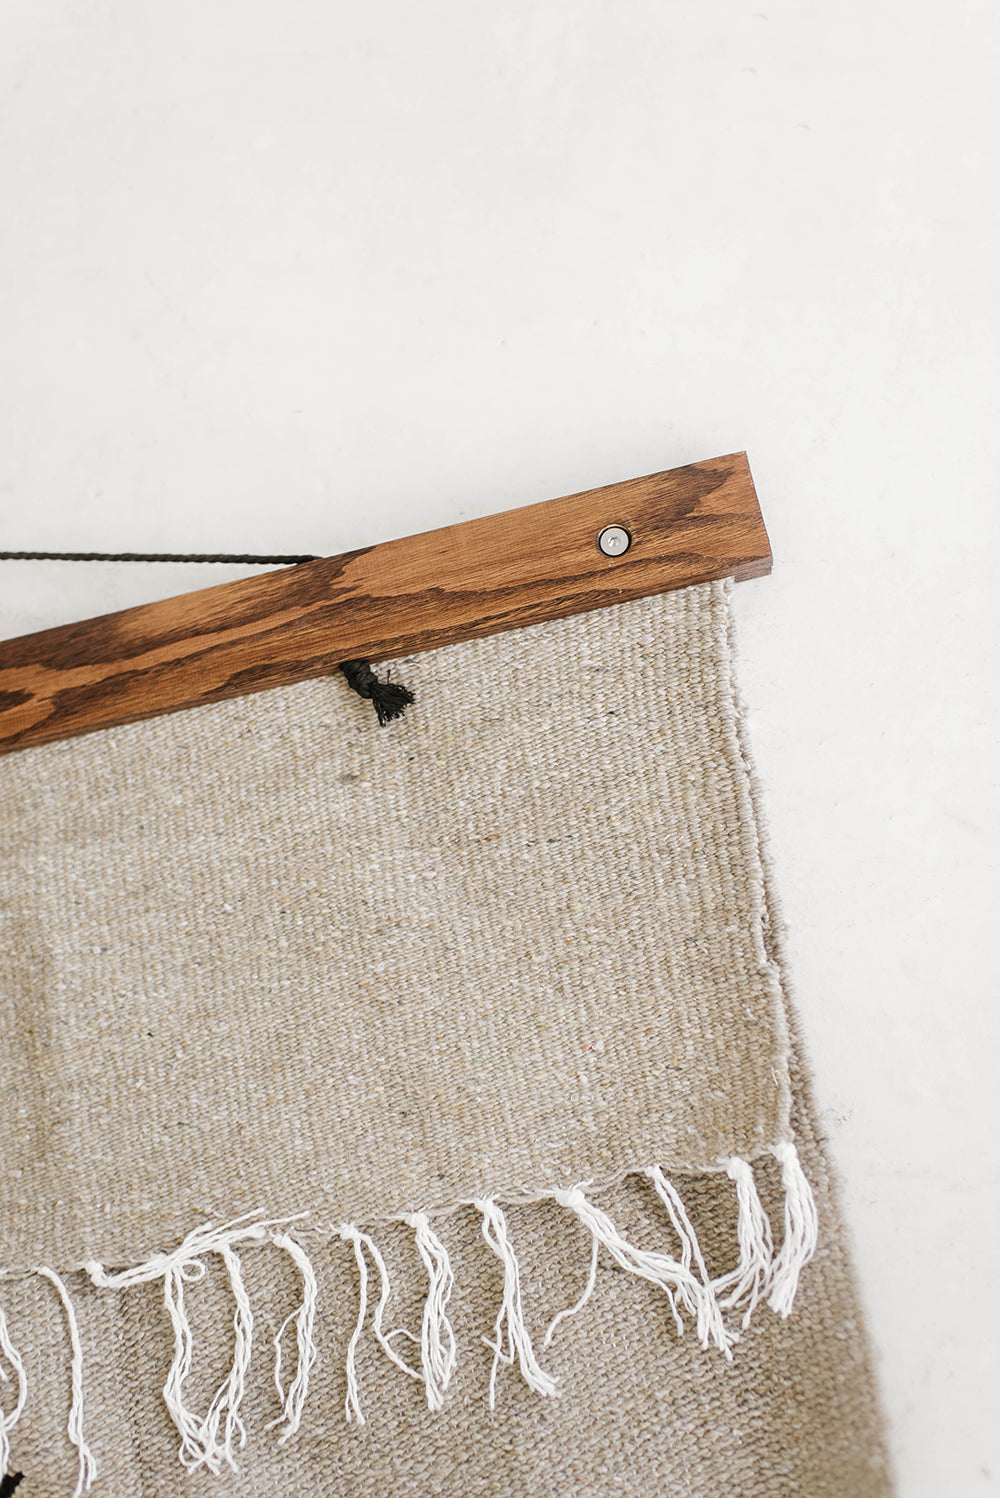 Wooden Hanger for Boho Rug Wall Hanging Idea